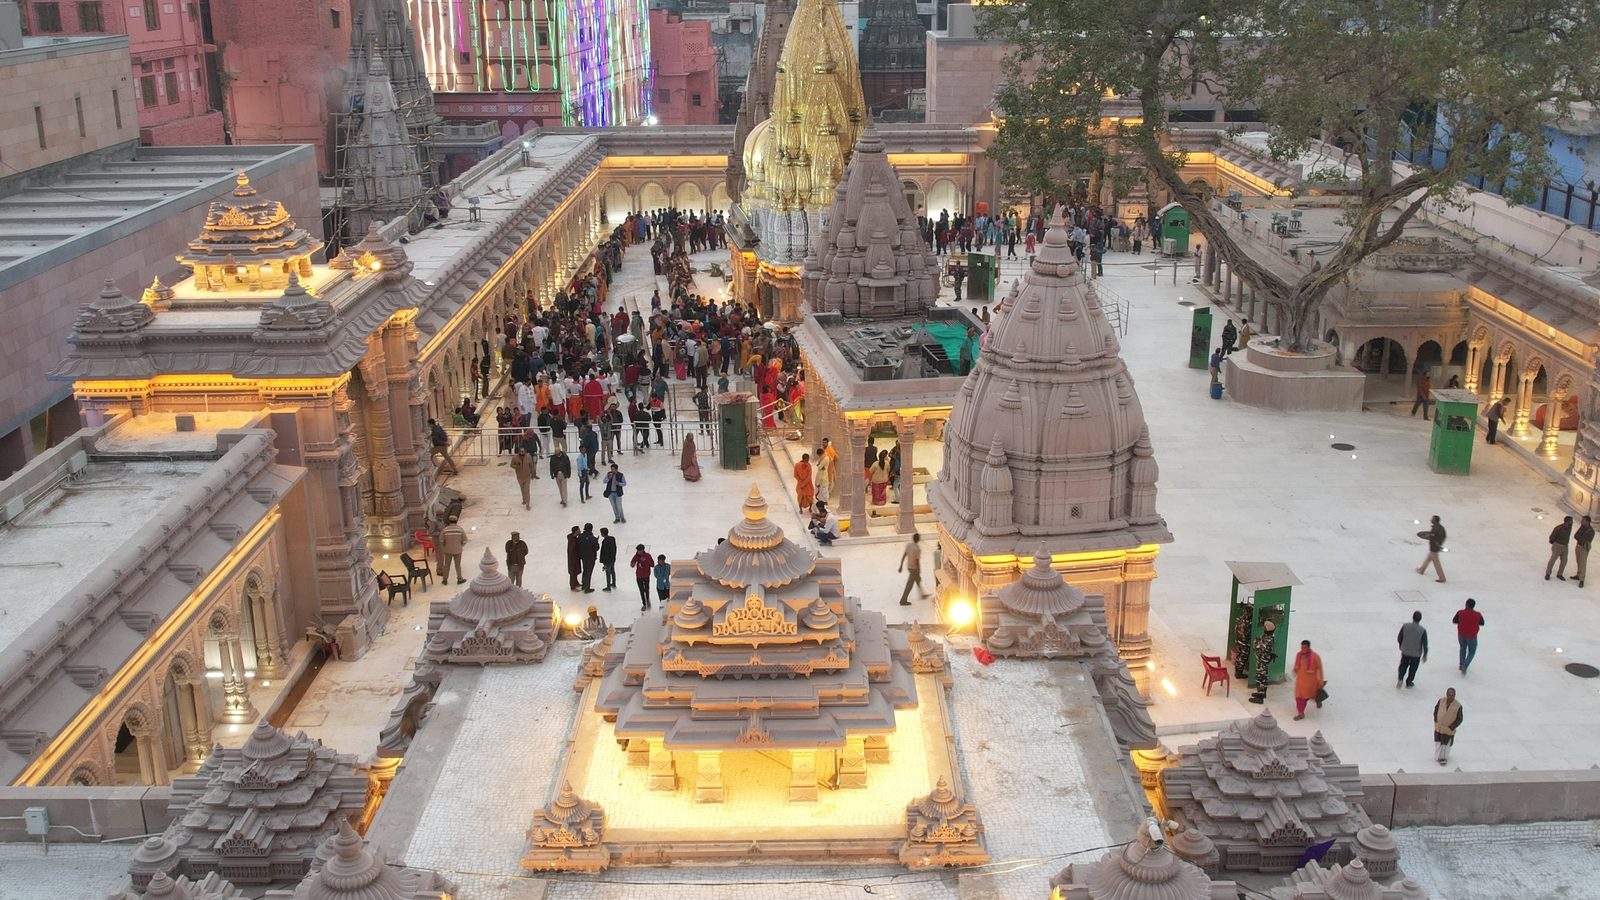 Kashi Vishwanath Temple will